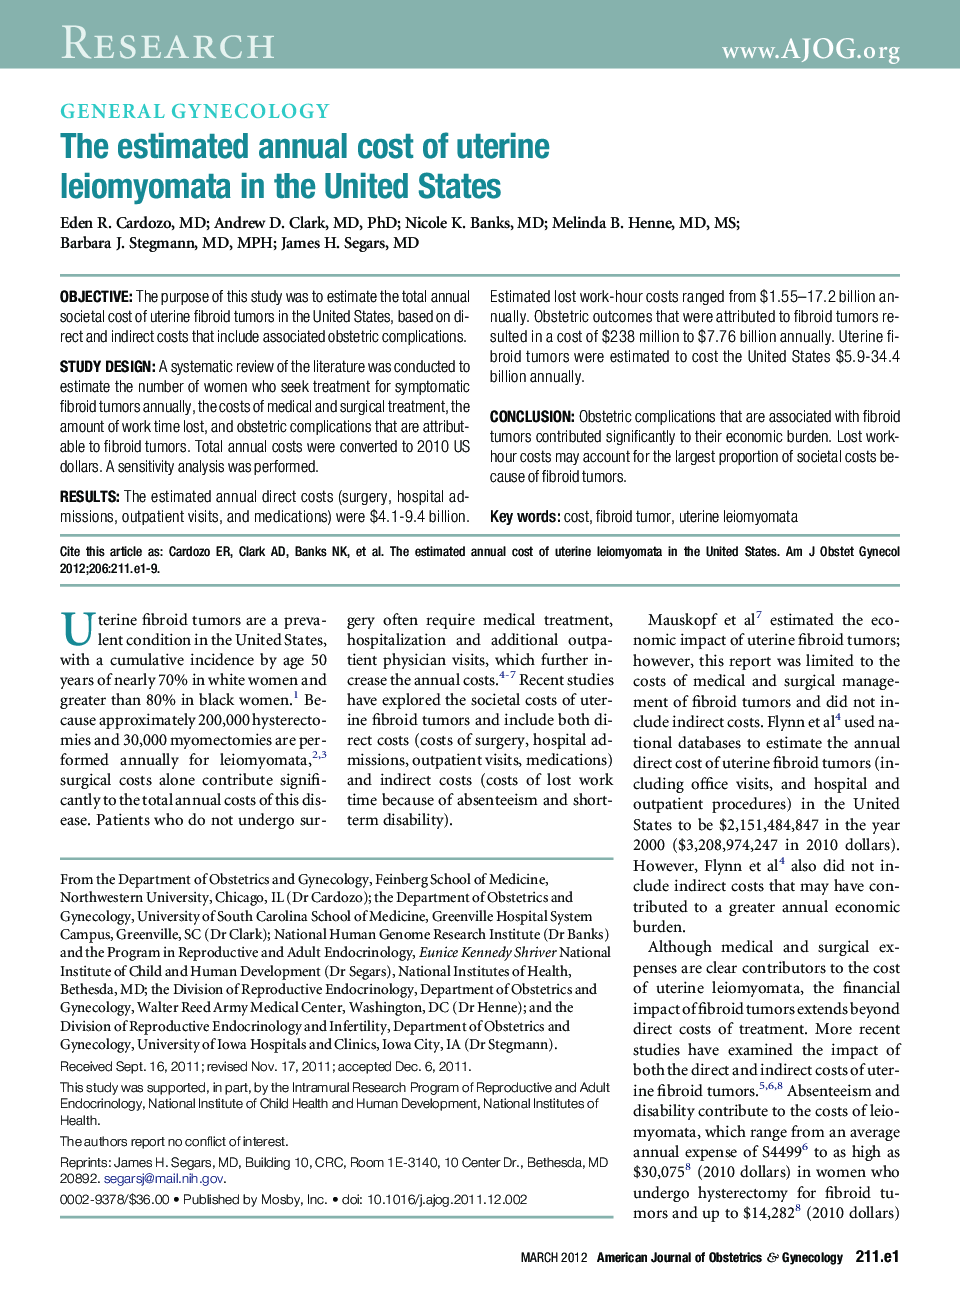 The estimated annual cost of uterine leiomyomata in the United States